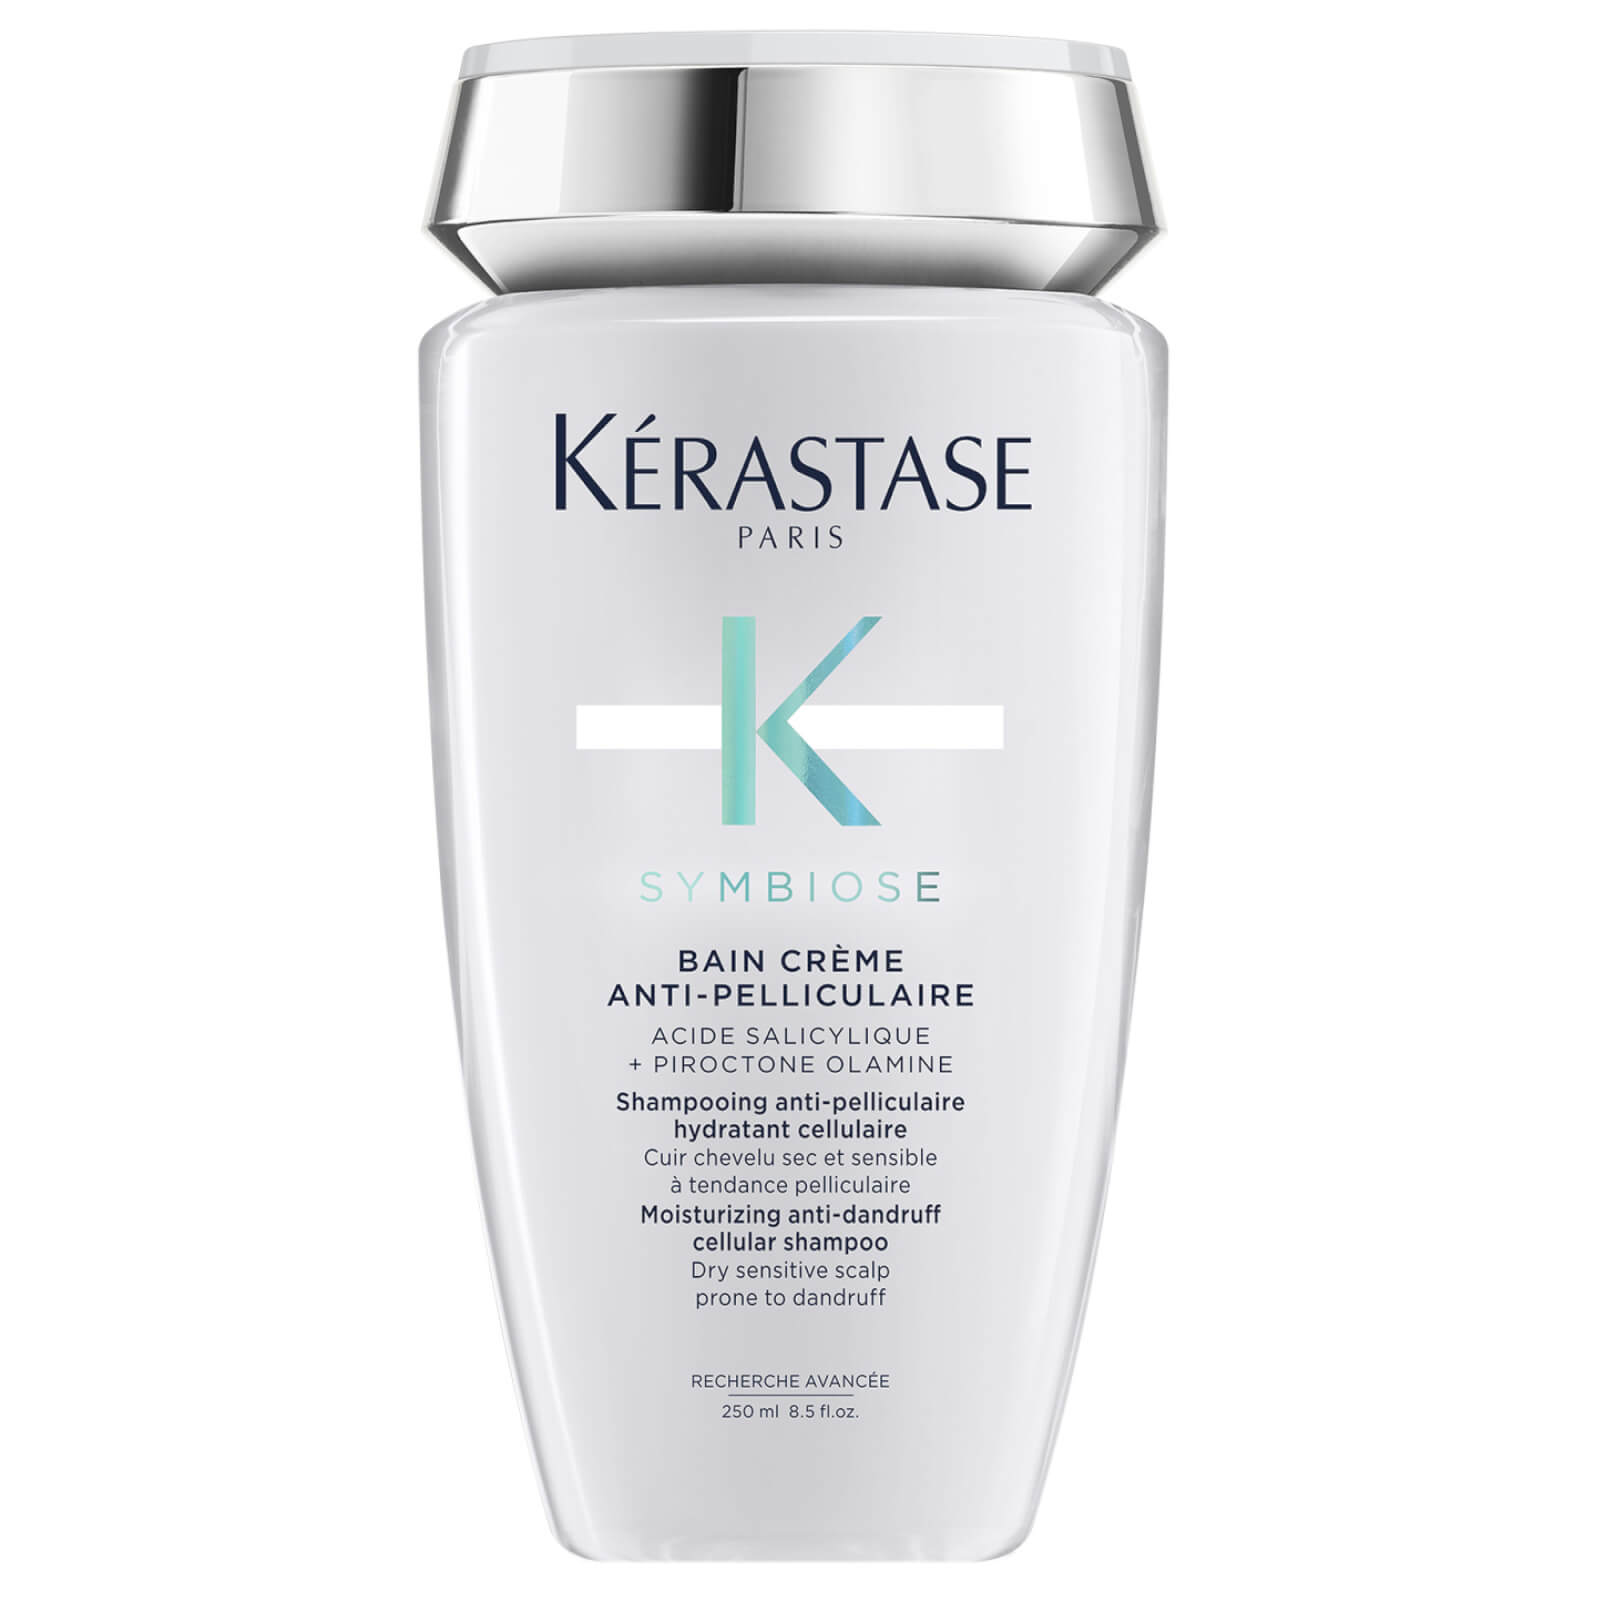 Kerastase Symbiose Moisturising Anti-Dandruff Cellular Shampoo, For Dry Sensitive Scalp, Prone To Da